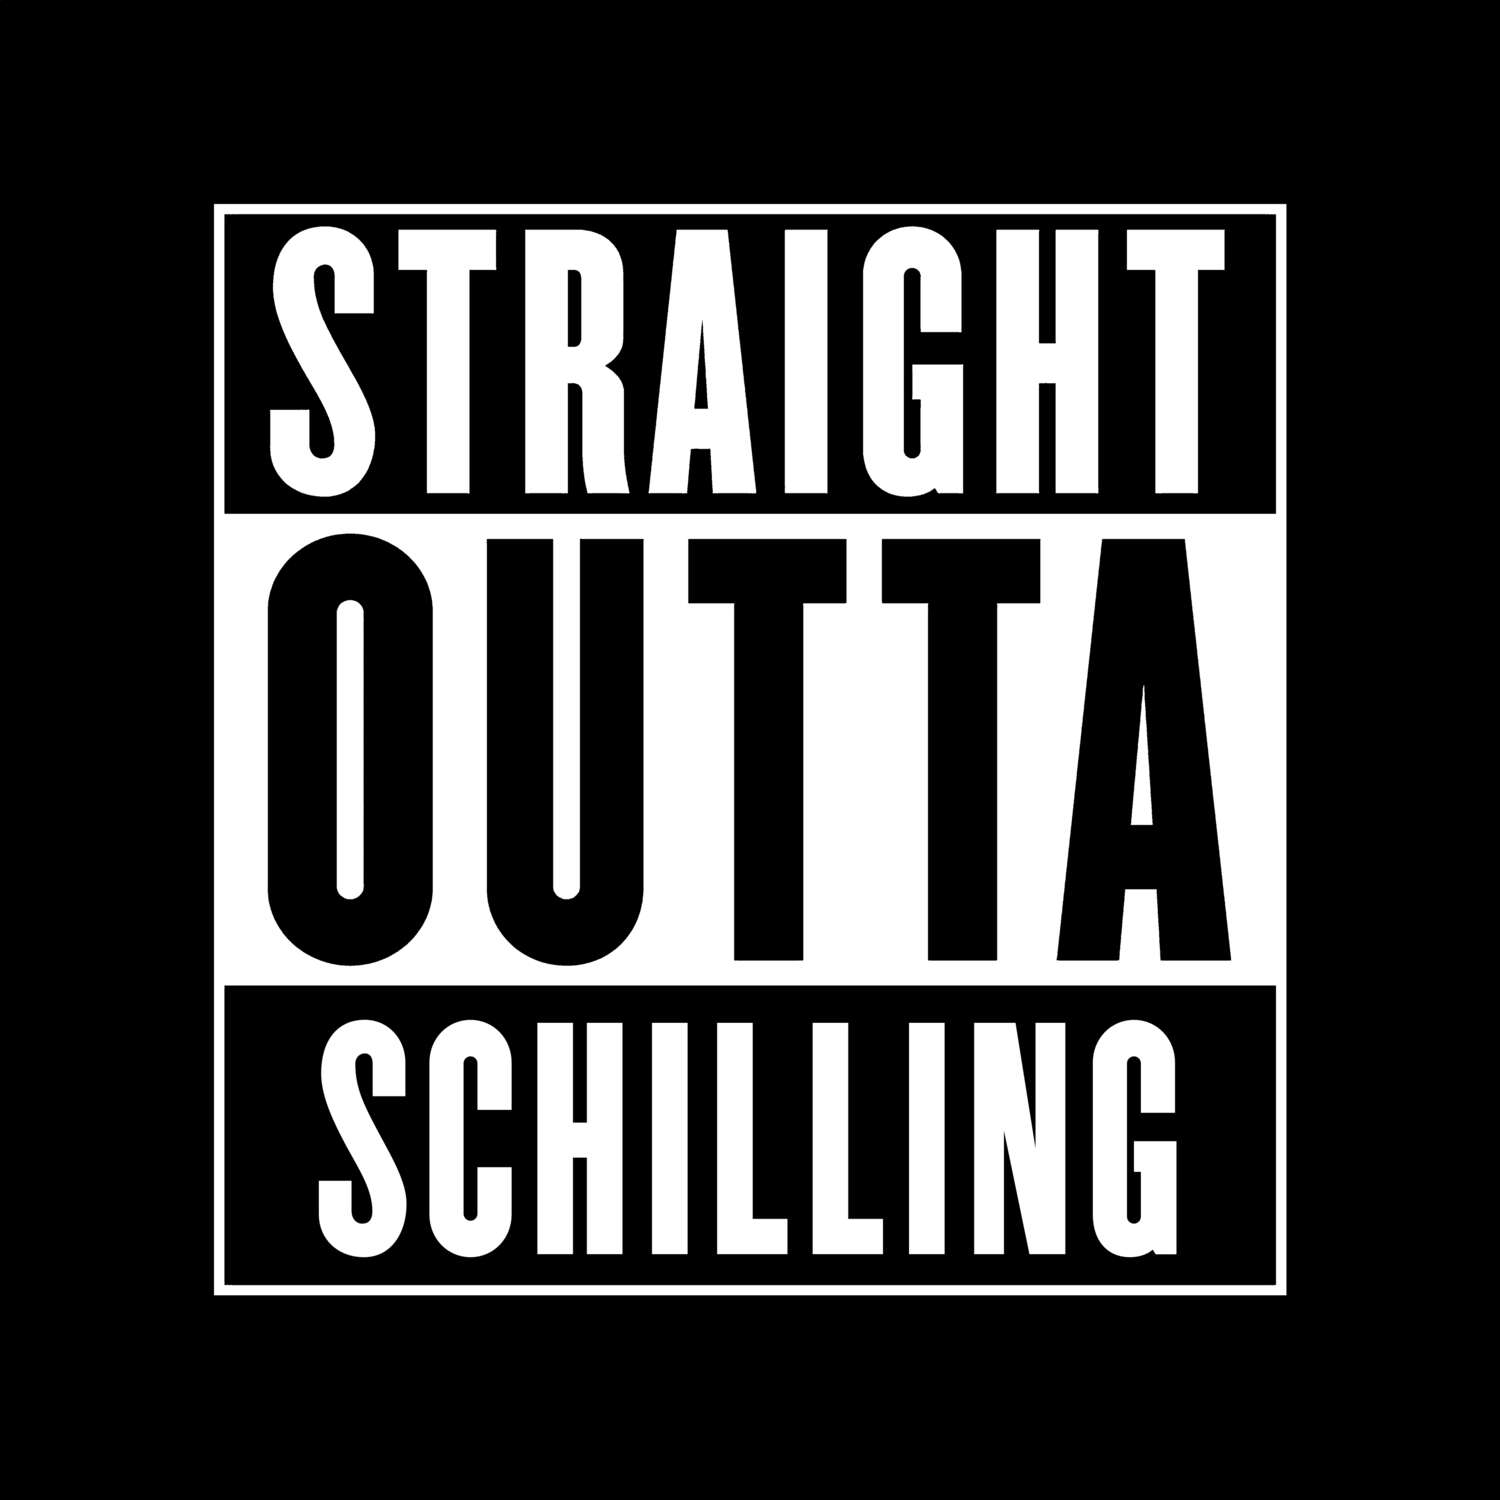 Schilling T-Shirt »Straight Outta«